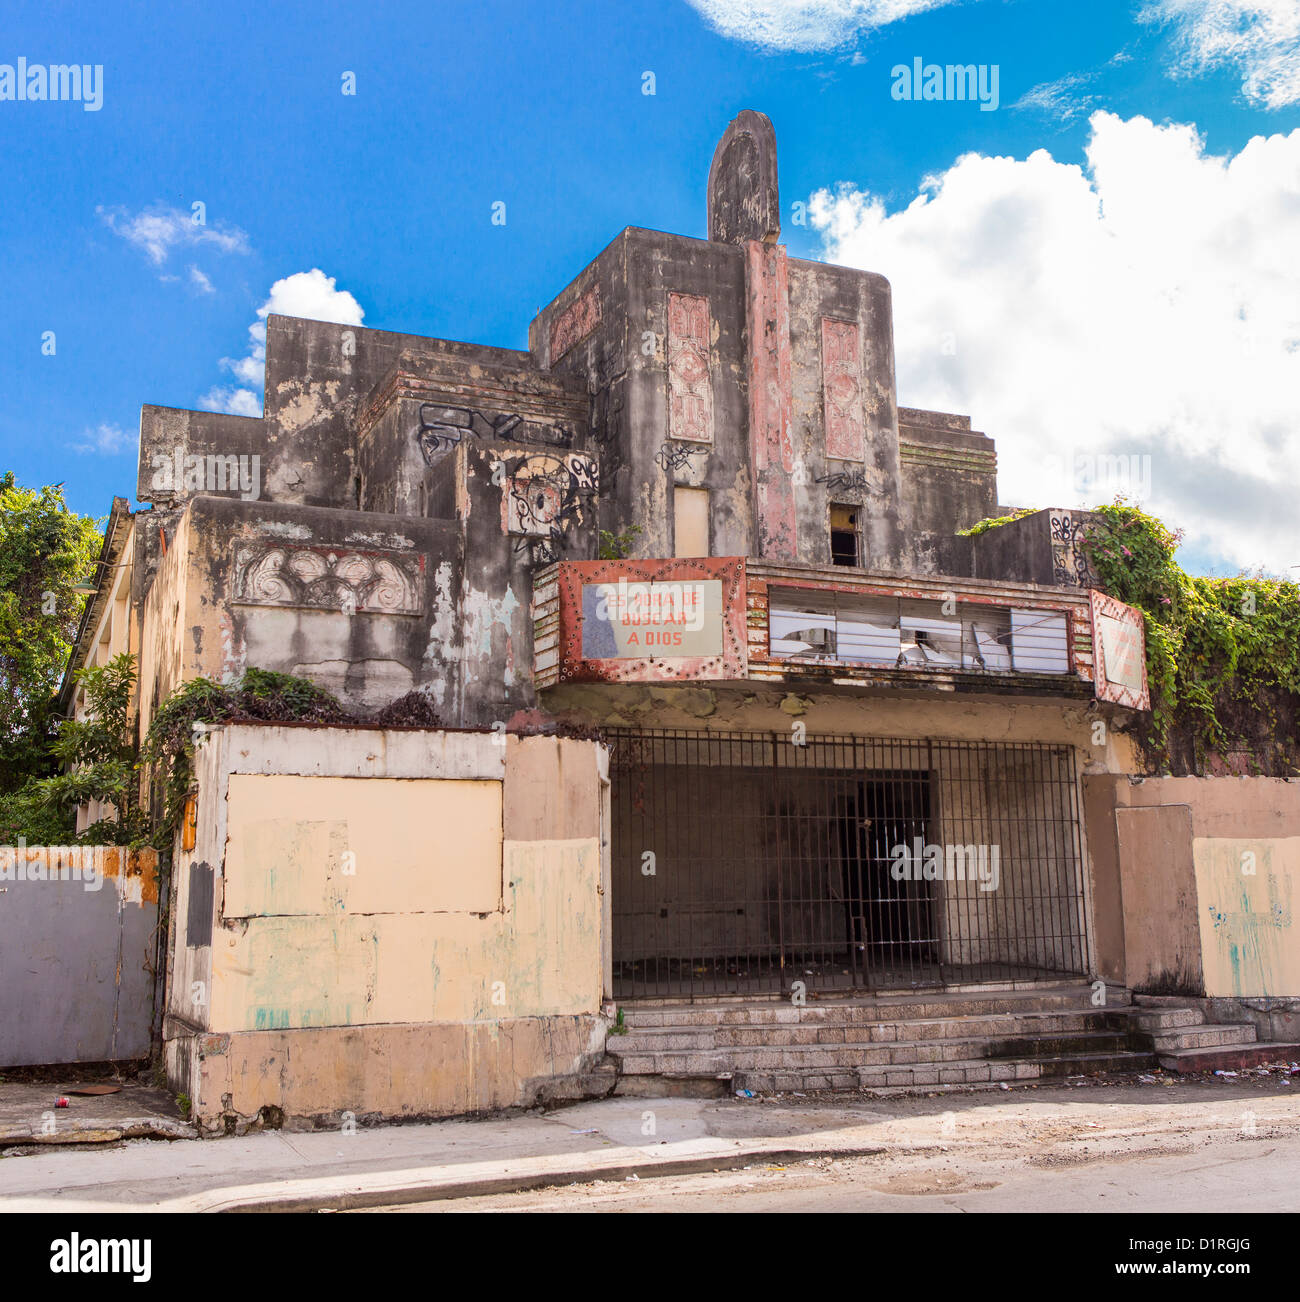 PONCE, PUERTO RICO - Abandoned movie theatre. Stock Photo